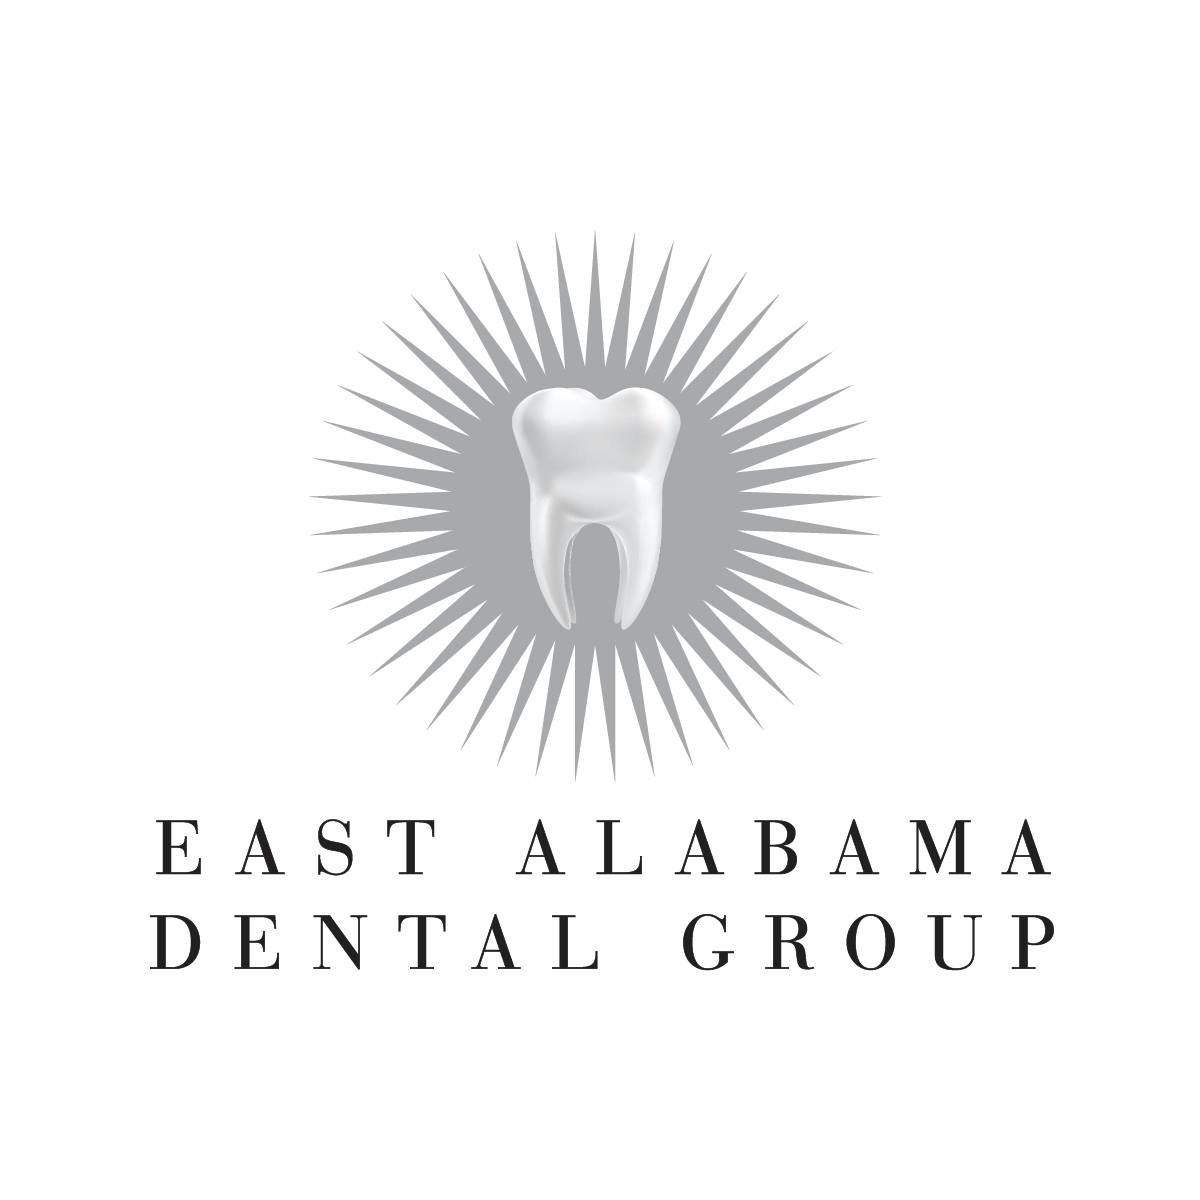 East Alabama Dental Group is a Full-Service Dental Office